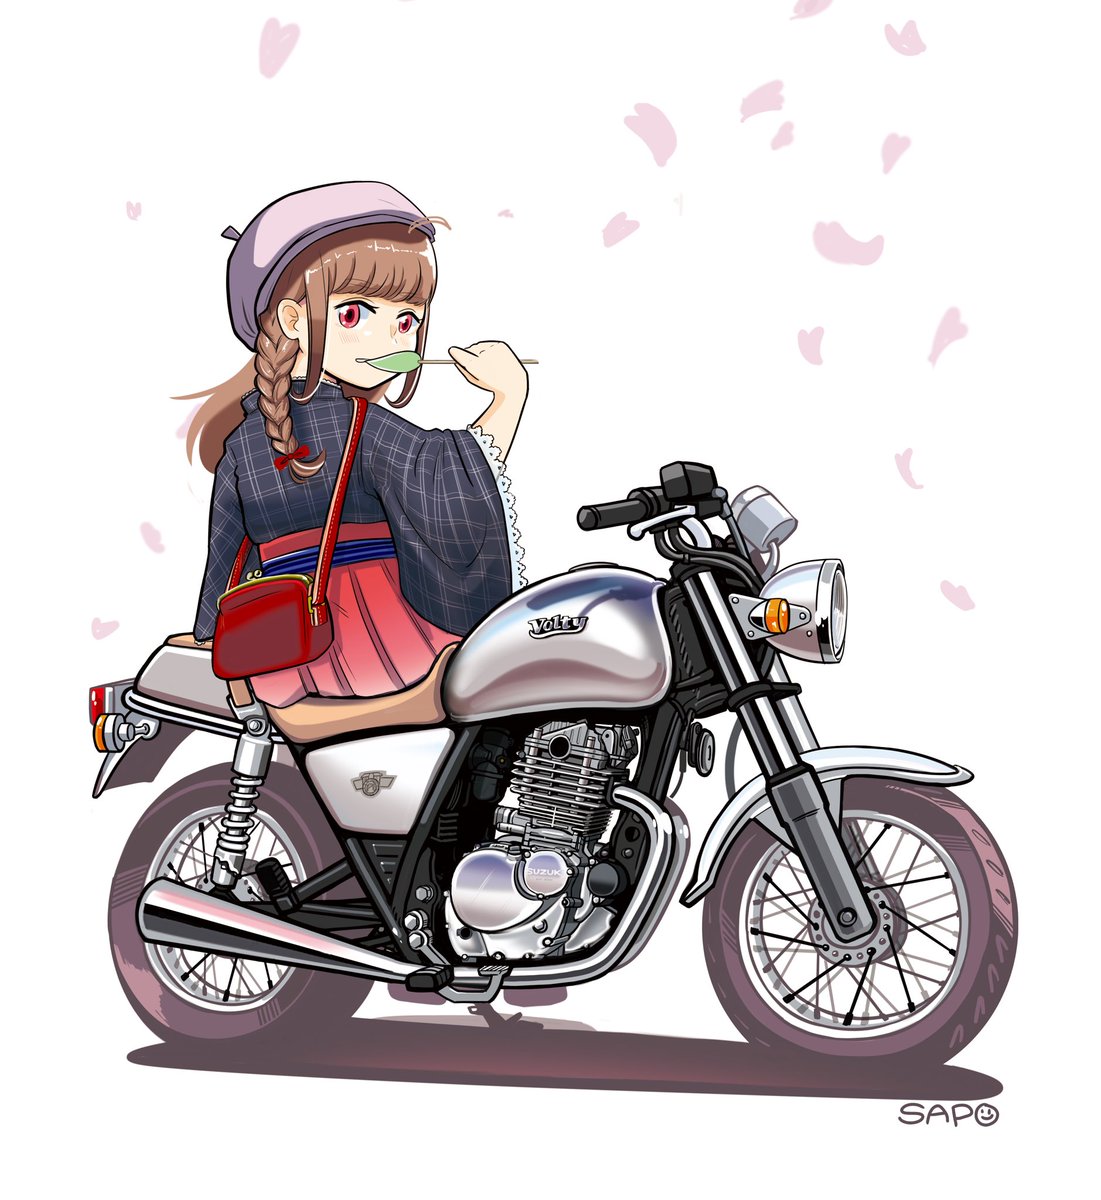 Sapo Pa Twitter Suzuki Volty 加筆ver イラスト本に載せるために加筆したボルティーさん 加筆というかほぼ書き直し笑 同じバイク 同じ構図 同じ子を描くっていうのは新旧を比べられるのでいいですね 前よりも表現の幅が出せるようになったかな とか思ったり